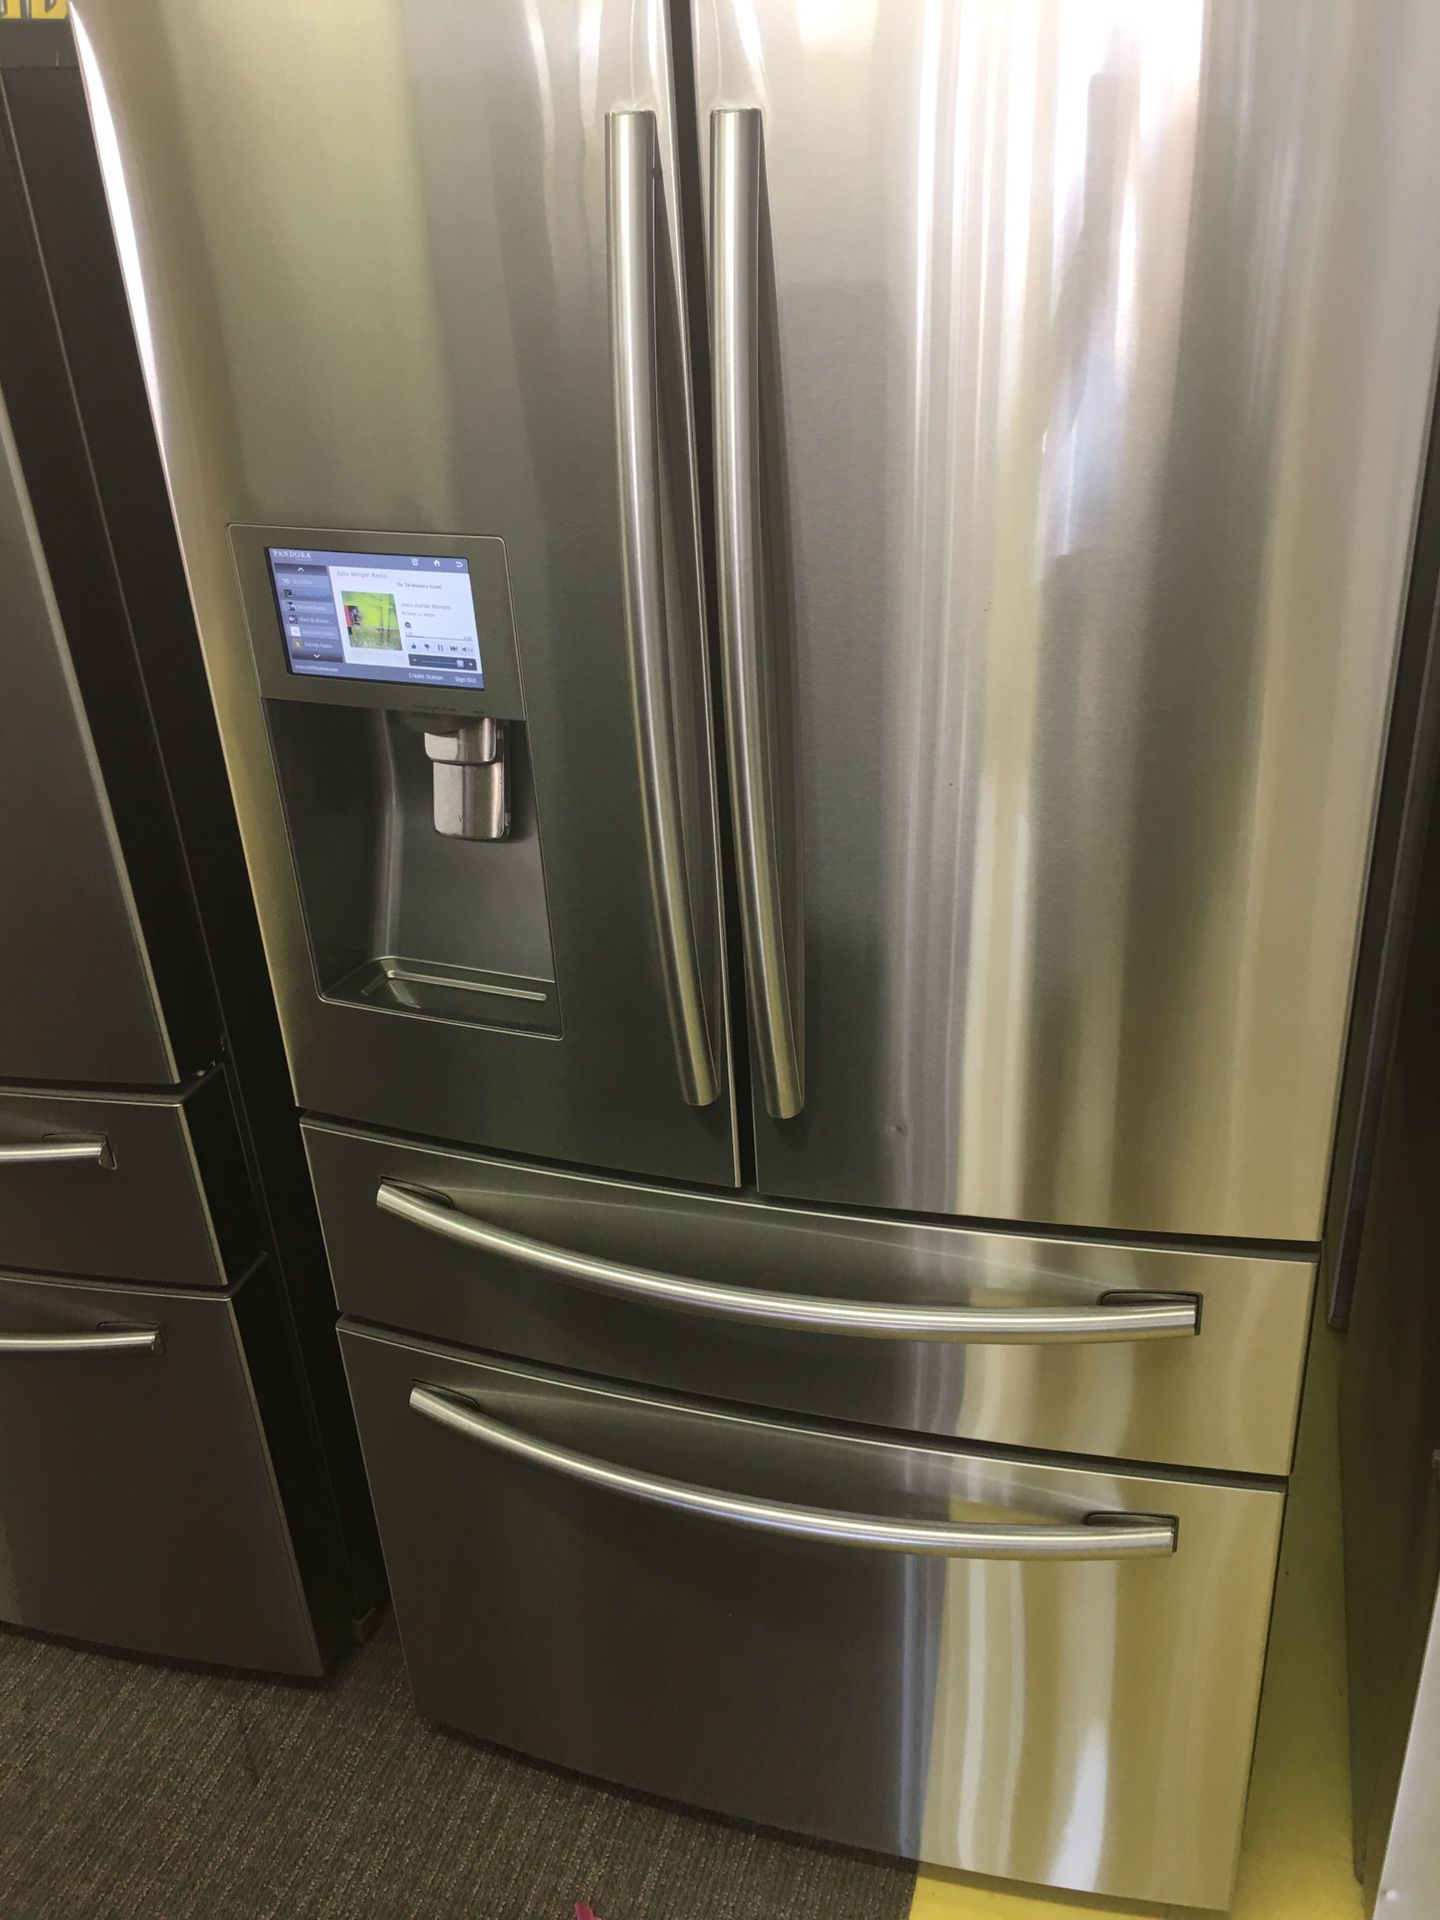 Samsung Stainless Steel 4 Door Refrigerador With Warranty No Credit Needed Just $54 De Enganche You Take Home